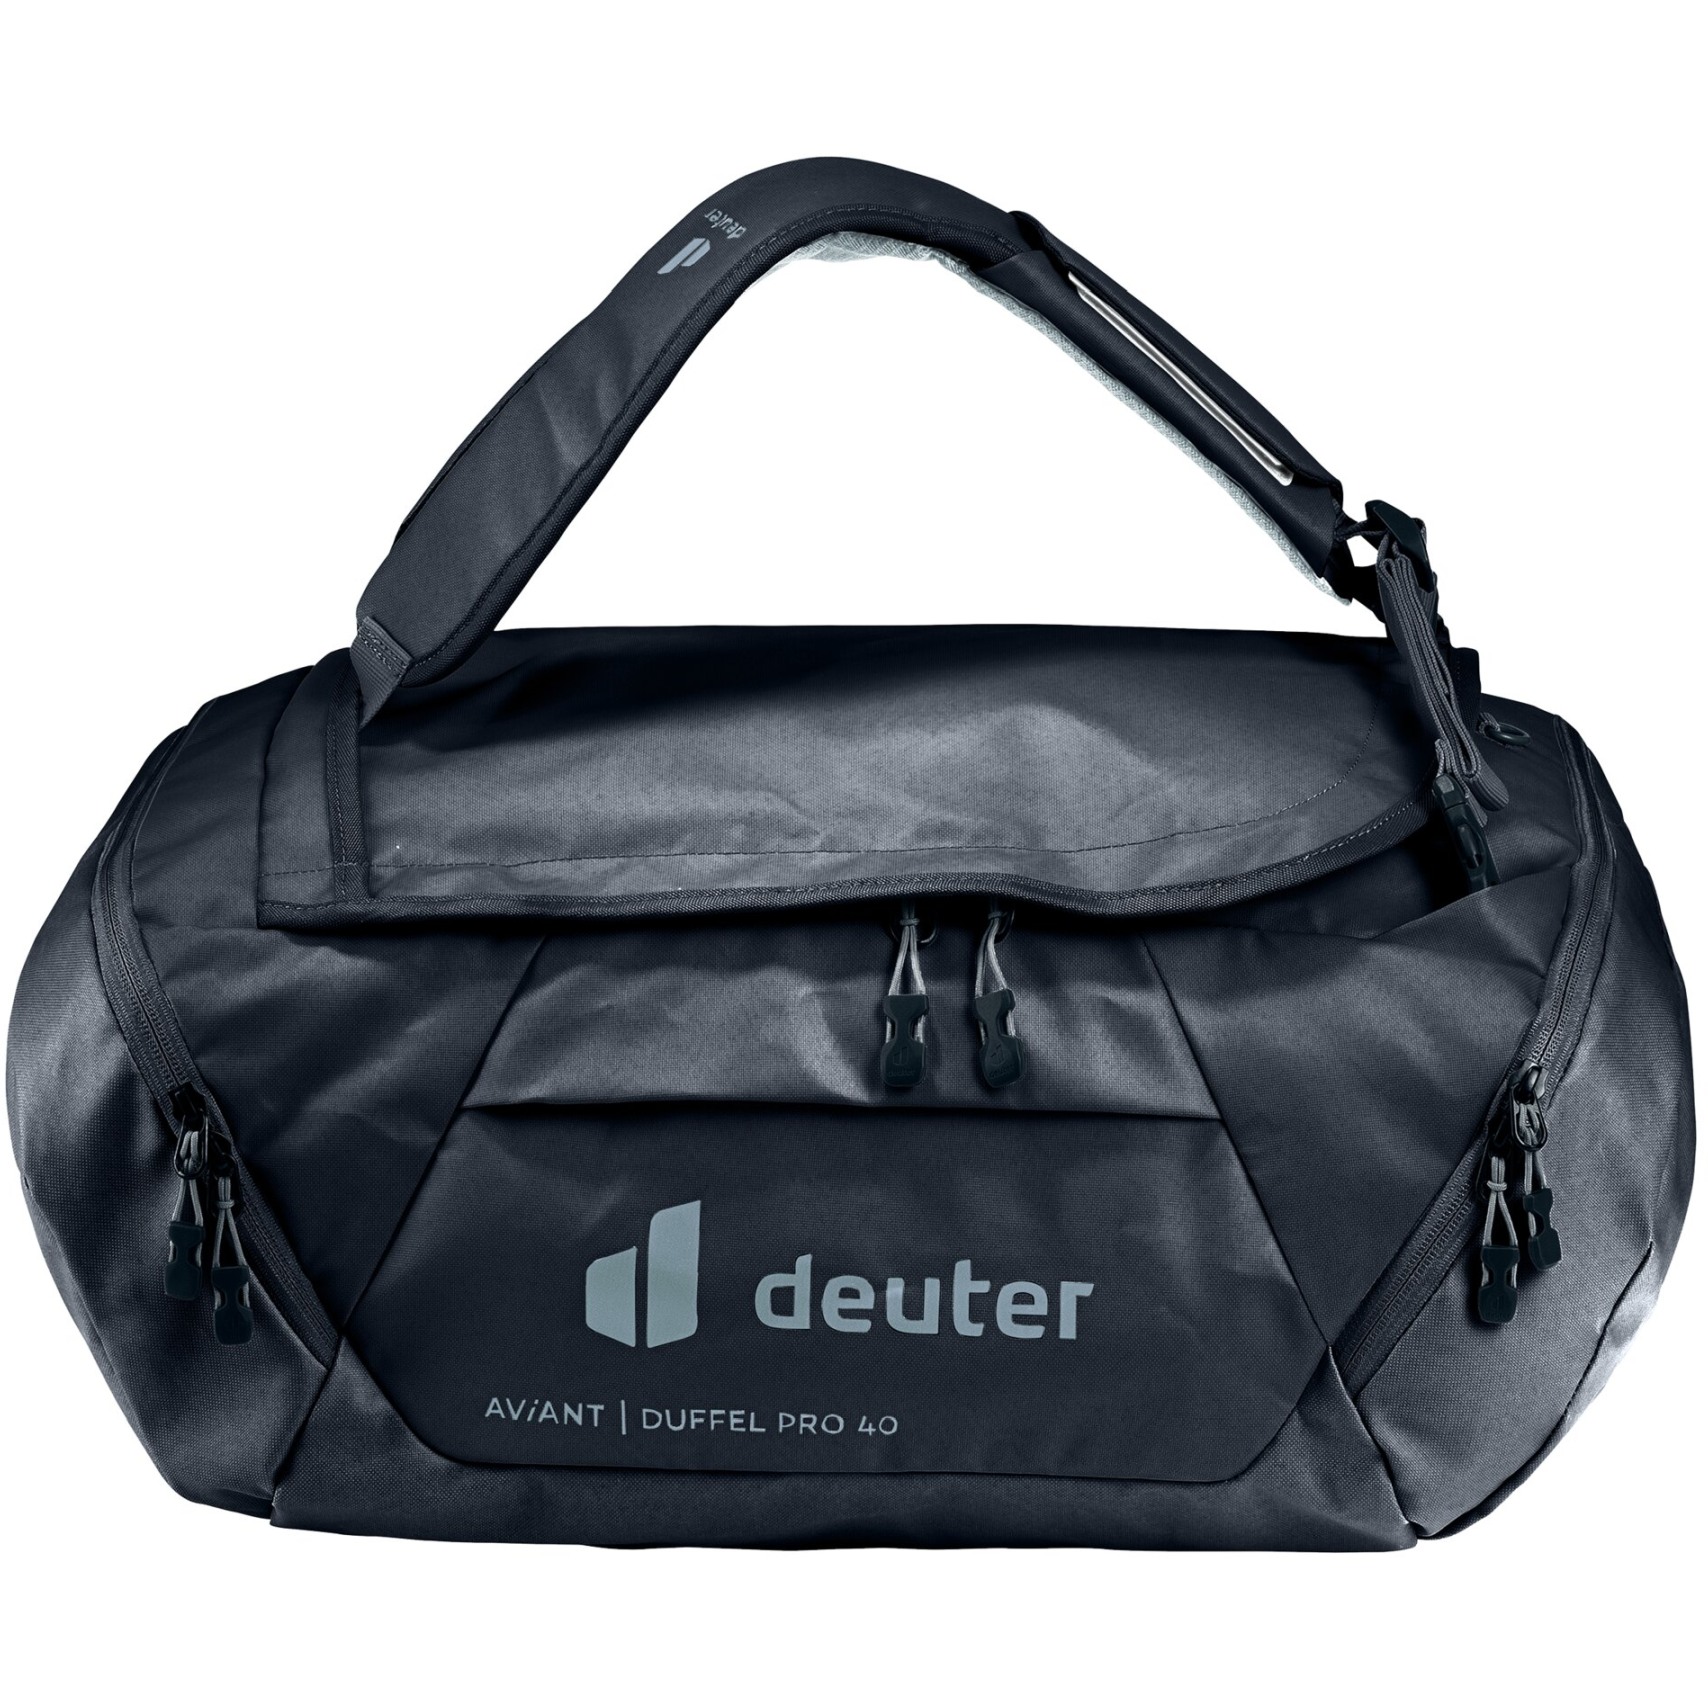 AViANT schwarz Deuter Pro Reisetasche BIKE24 - 40 | Duffel